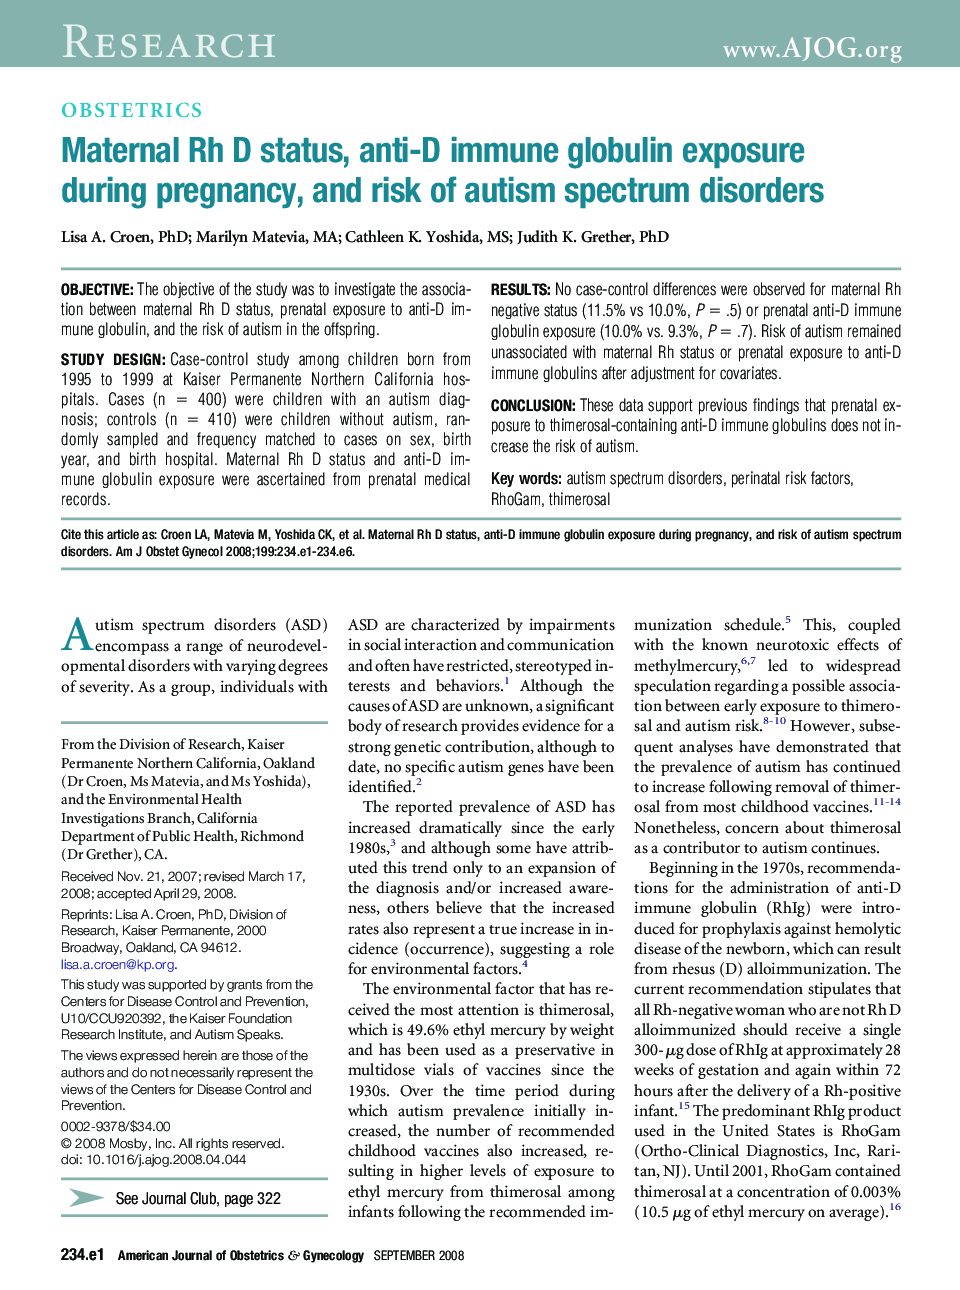 Maternal Rh D status, anti-D immune globulin exposure during pregnancy, and risk of autism spectrum disorders